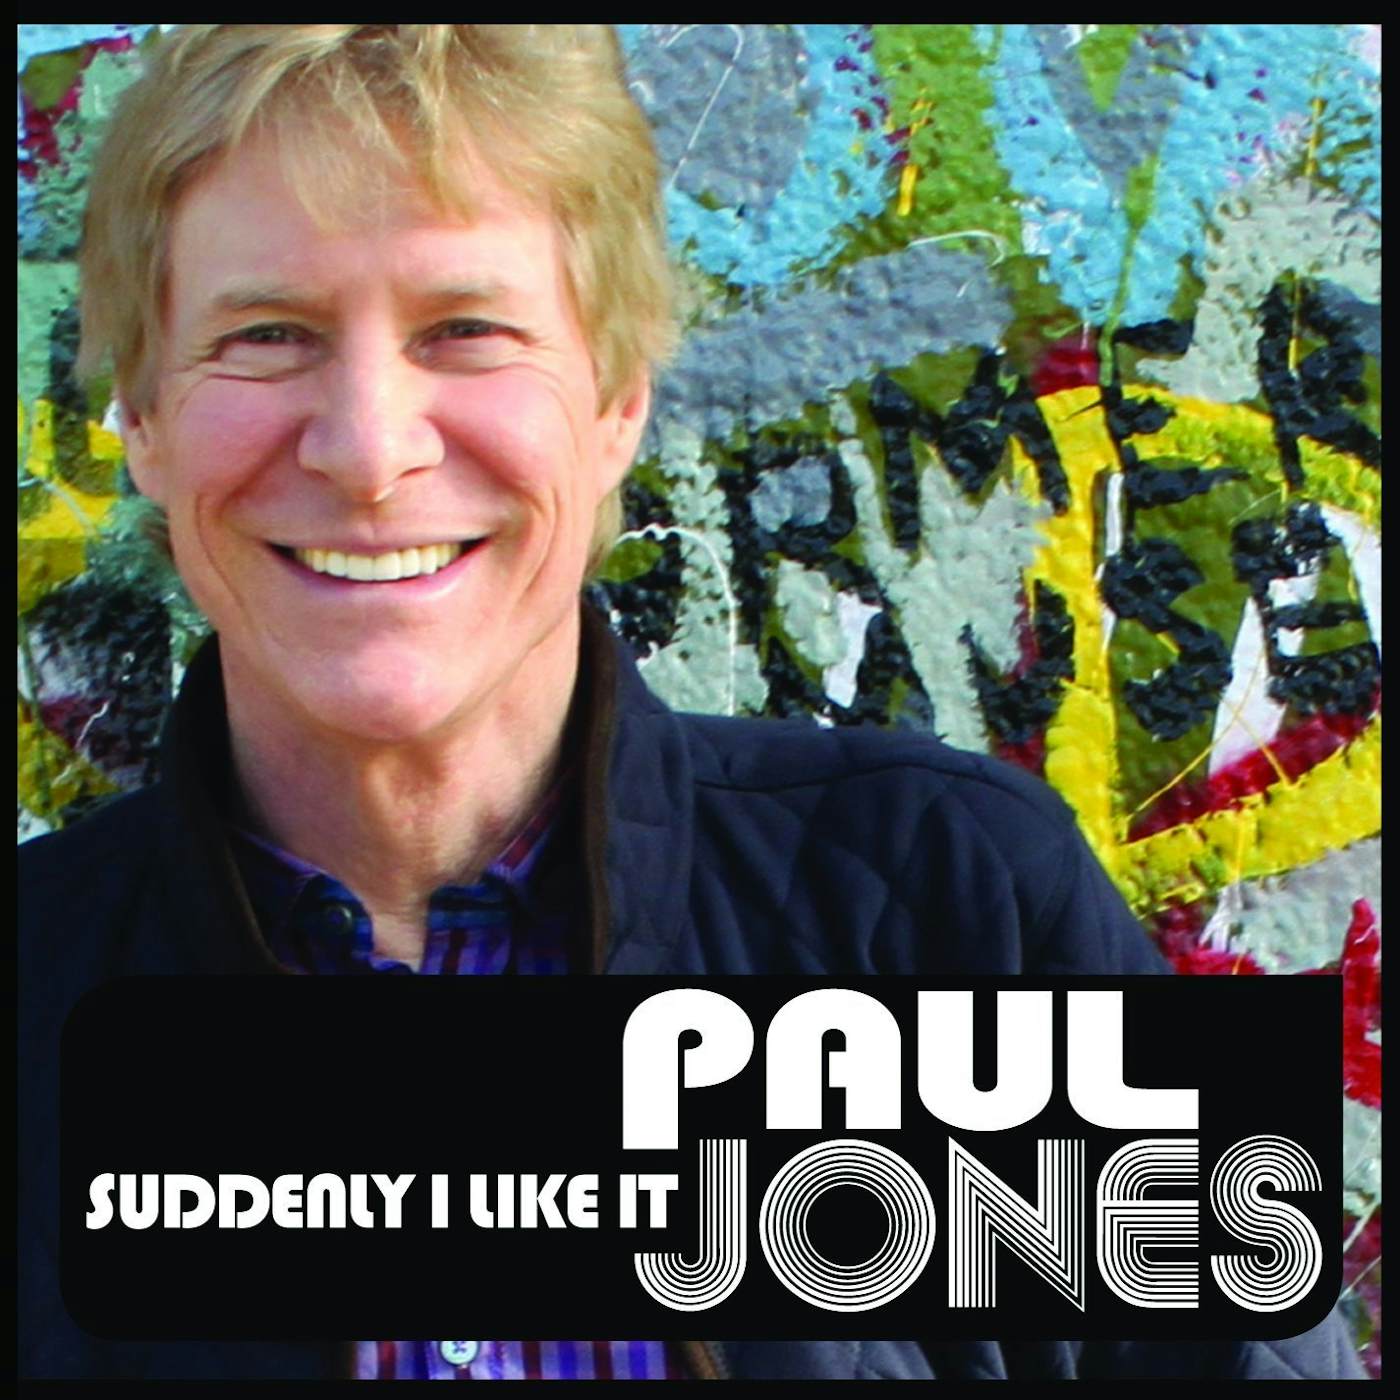 Paul Jones SUDDENLY I LIKE IT CD